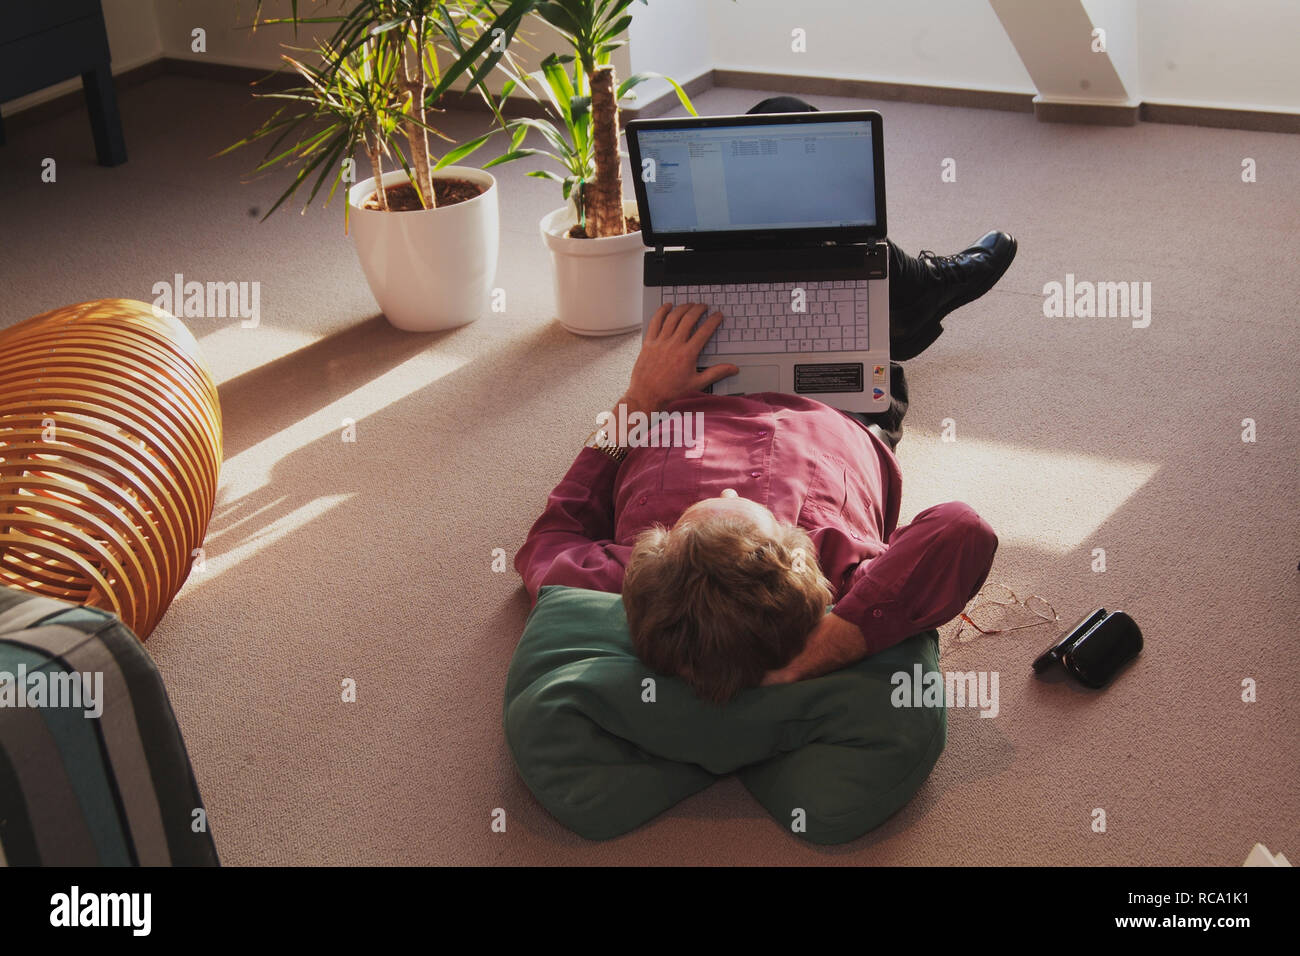 Mann mittleren Alters mit Notebook auf dem Boden liegend | middleaged man is lying on the floor with a notebook Stock Photo